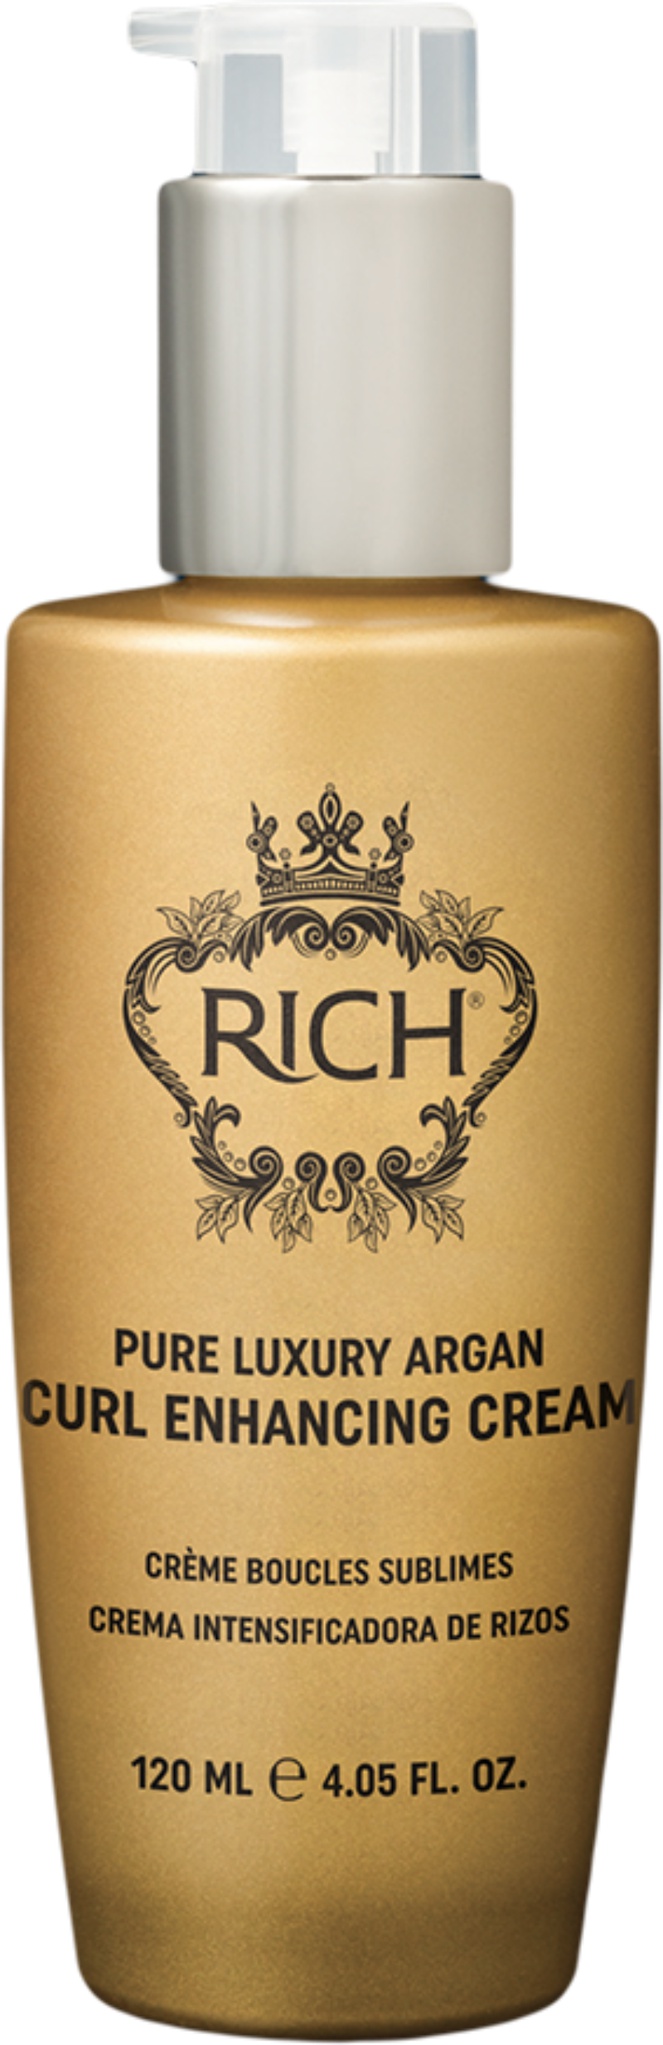 Pure Luxury Argan Curl Enhancing Cream